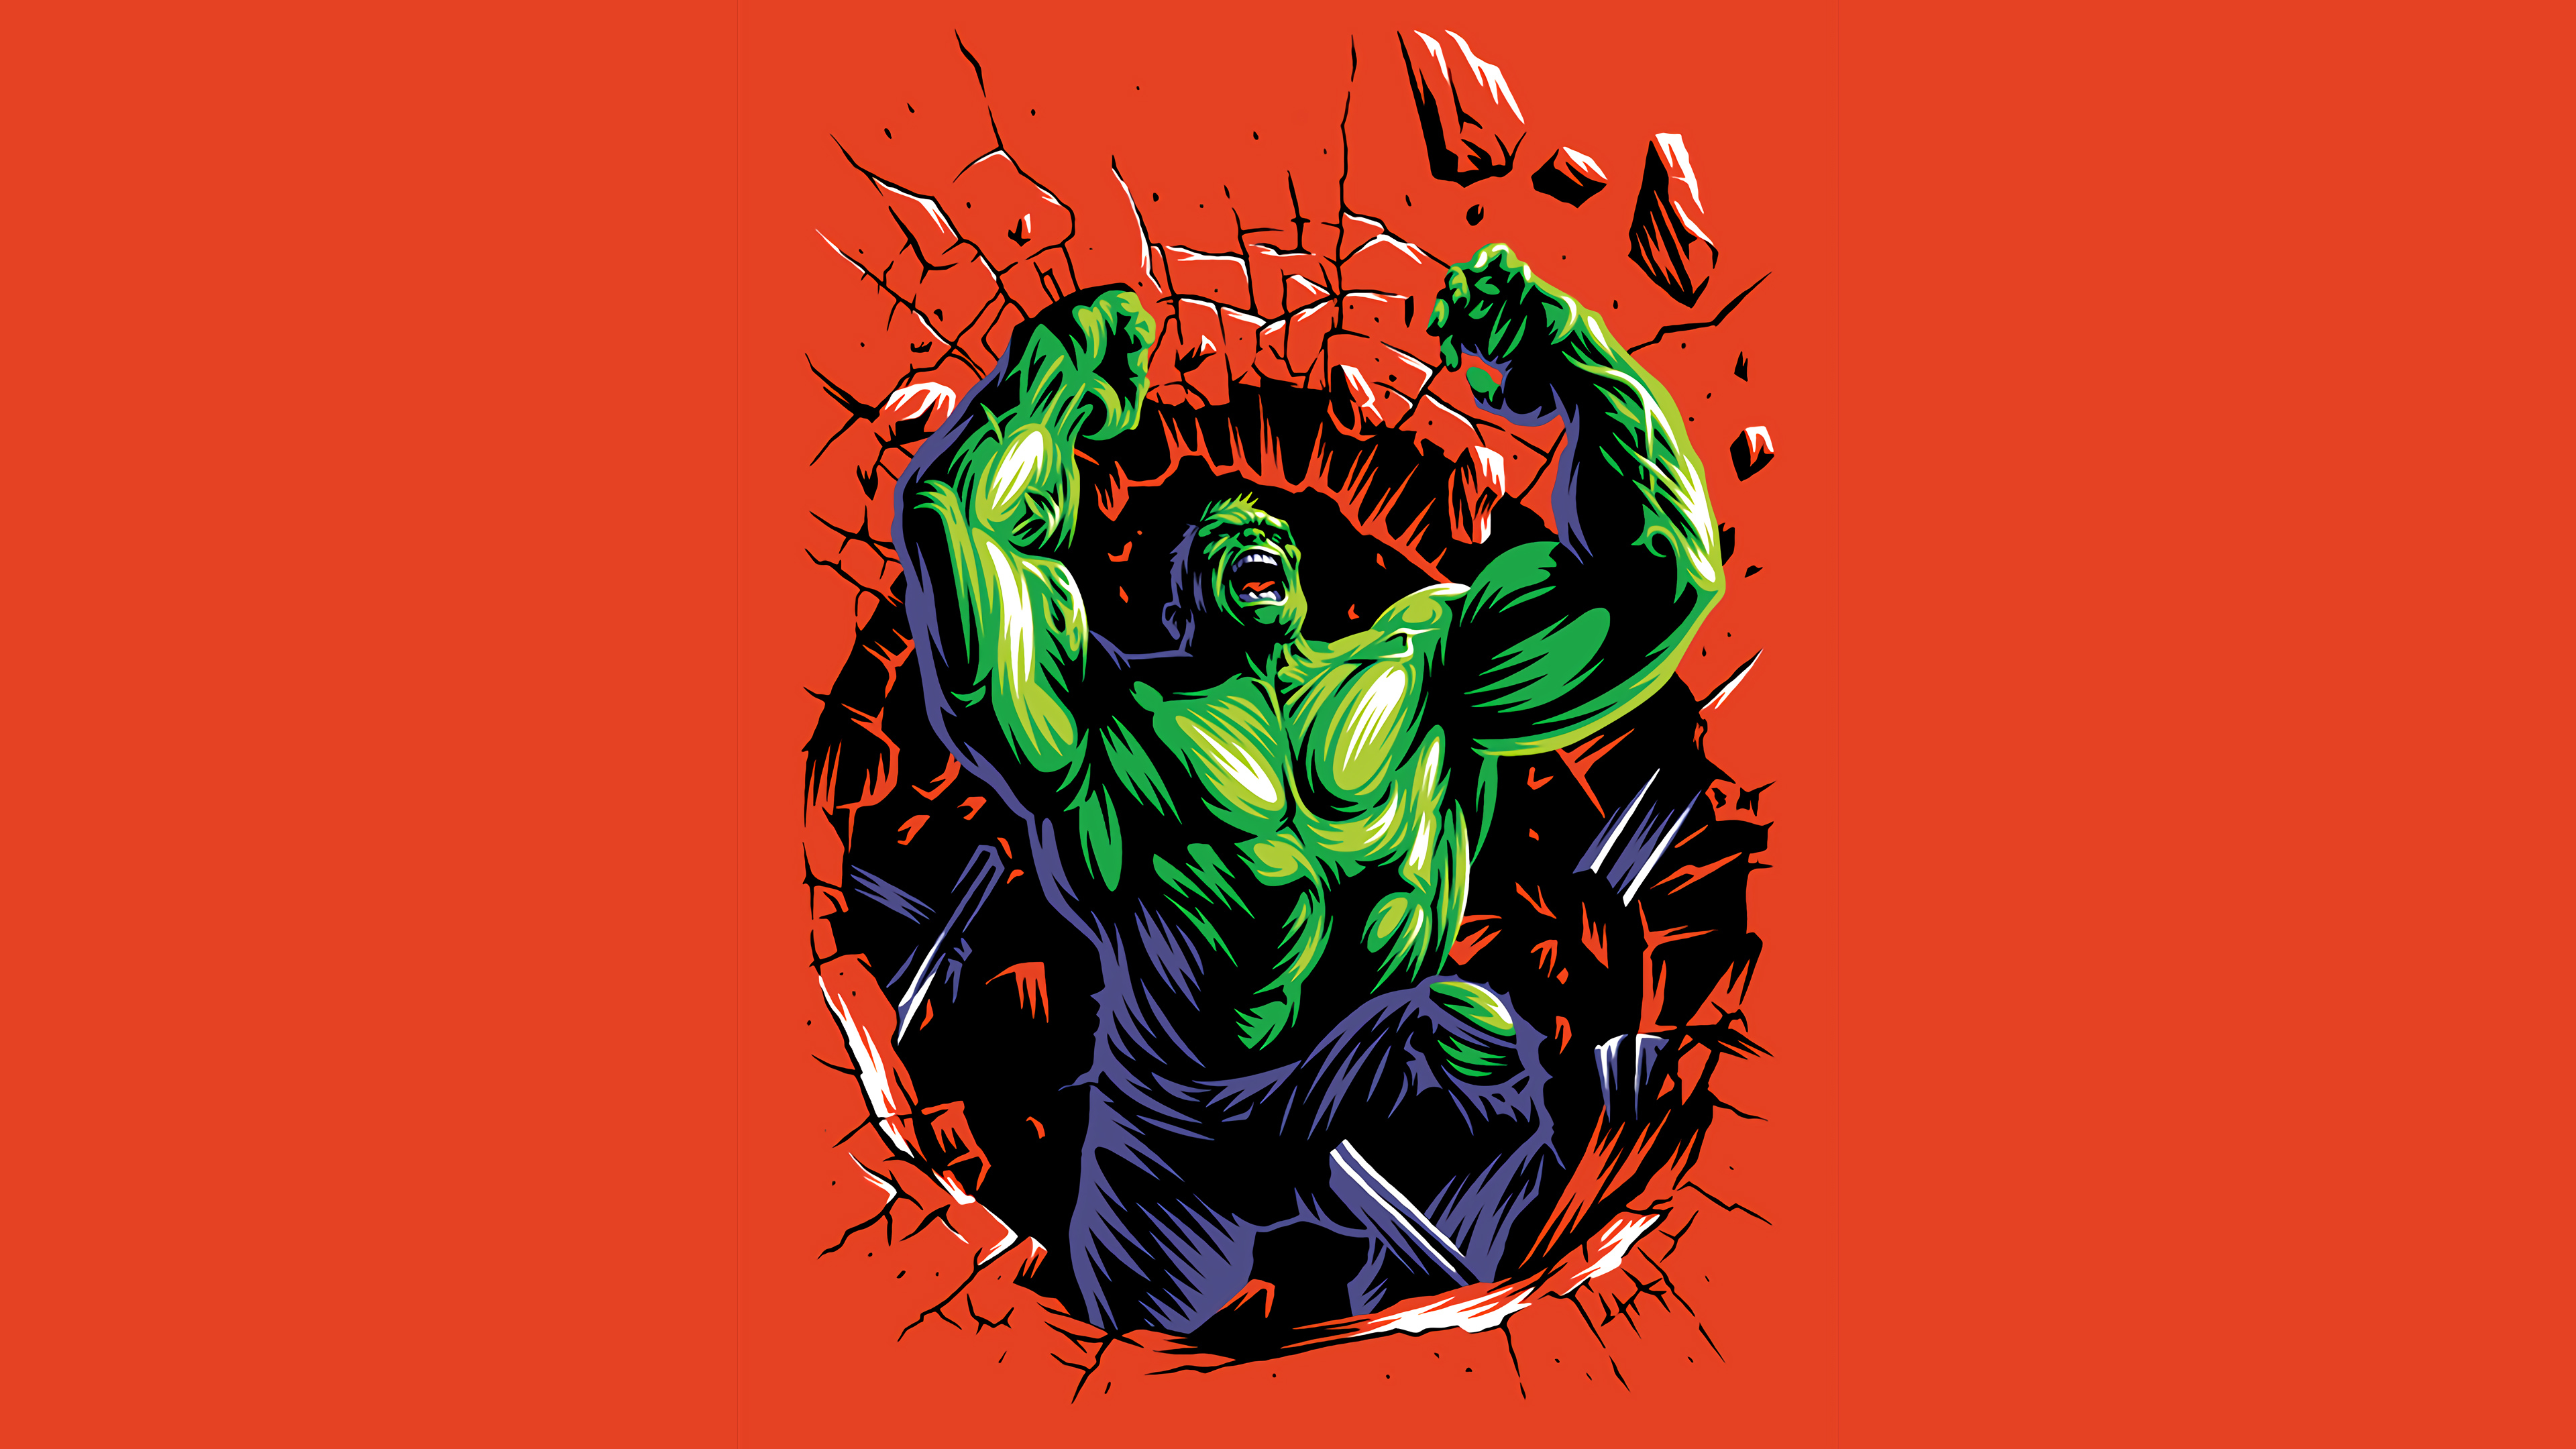 Hulk 4K Minimal Art Wallpaper, HD Minimalist 4K Wallpapers, Images, Photos  and Background - Wallpapers Den